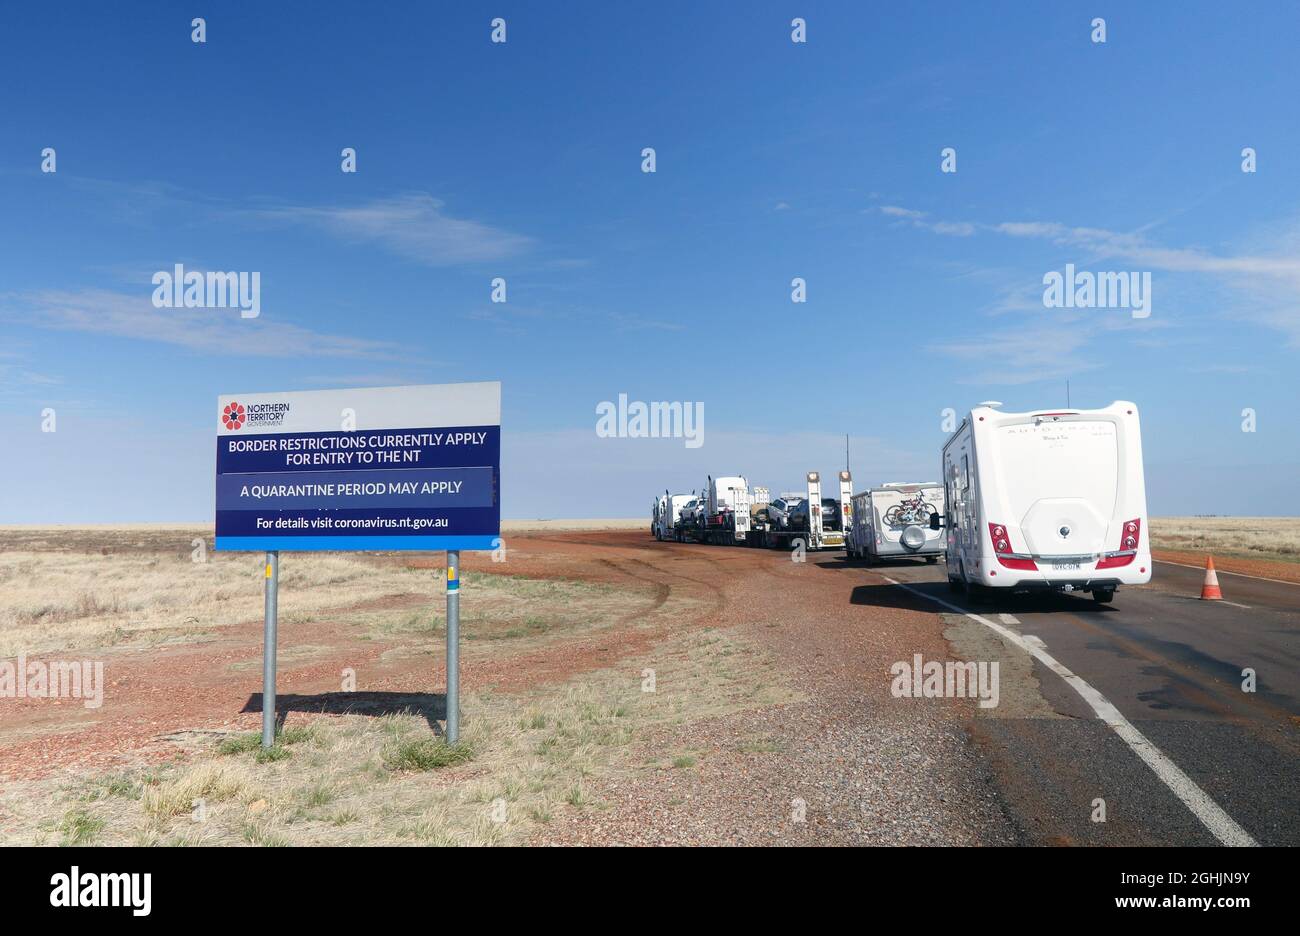 Vehicles queued for coronavirus screening at the Qld/NT border near Camooweal, Queensland, Australia. No PR Stock Photo